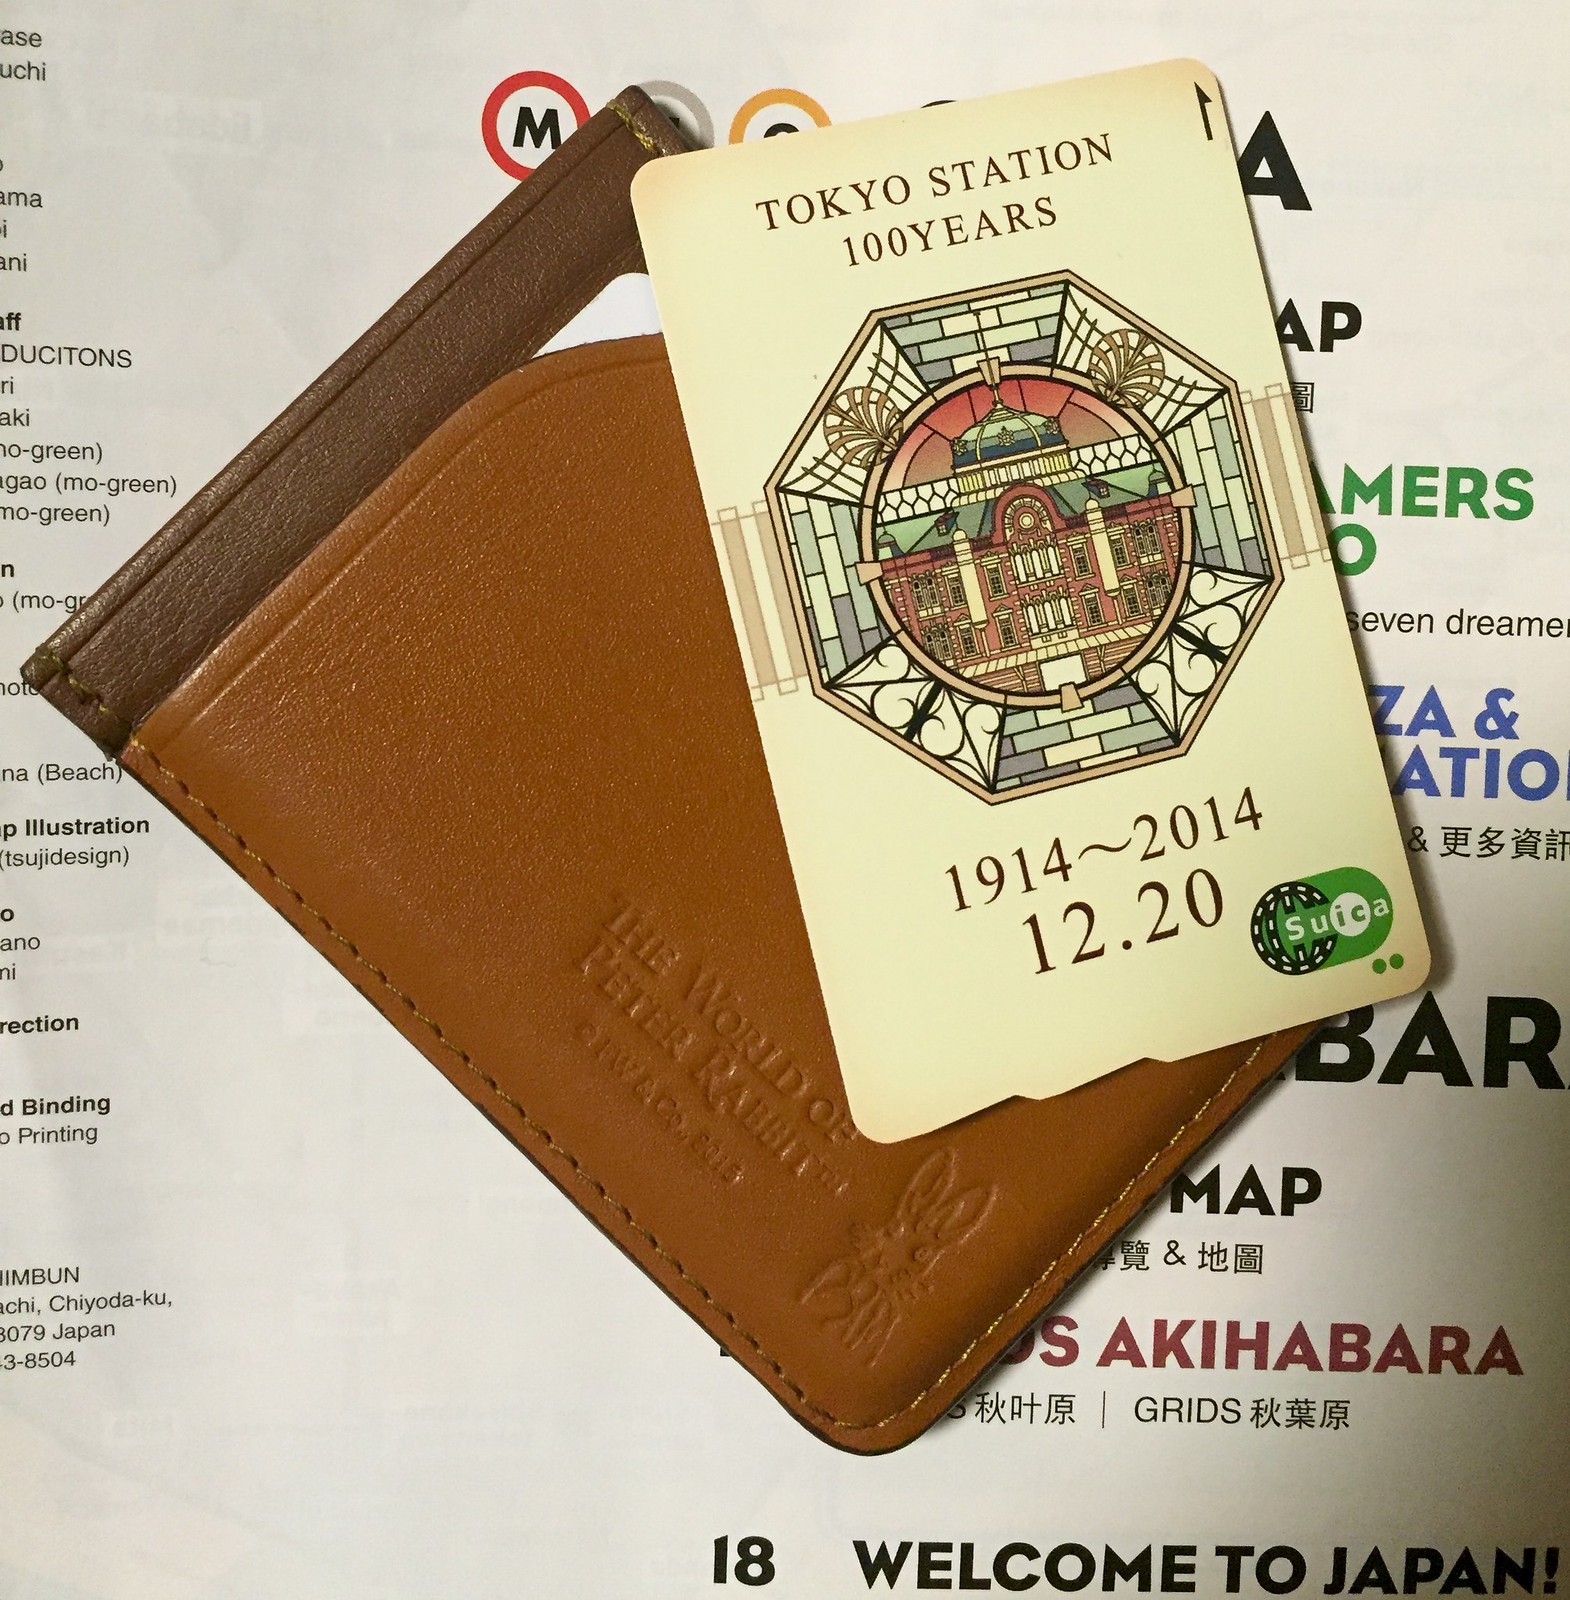 Tokyo Station 100 Year Anniversary Card